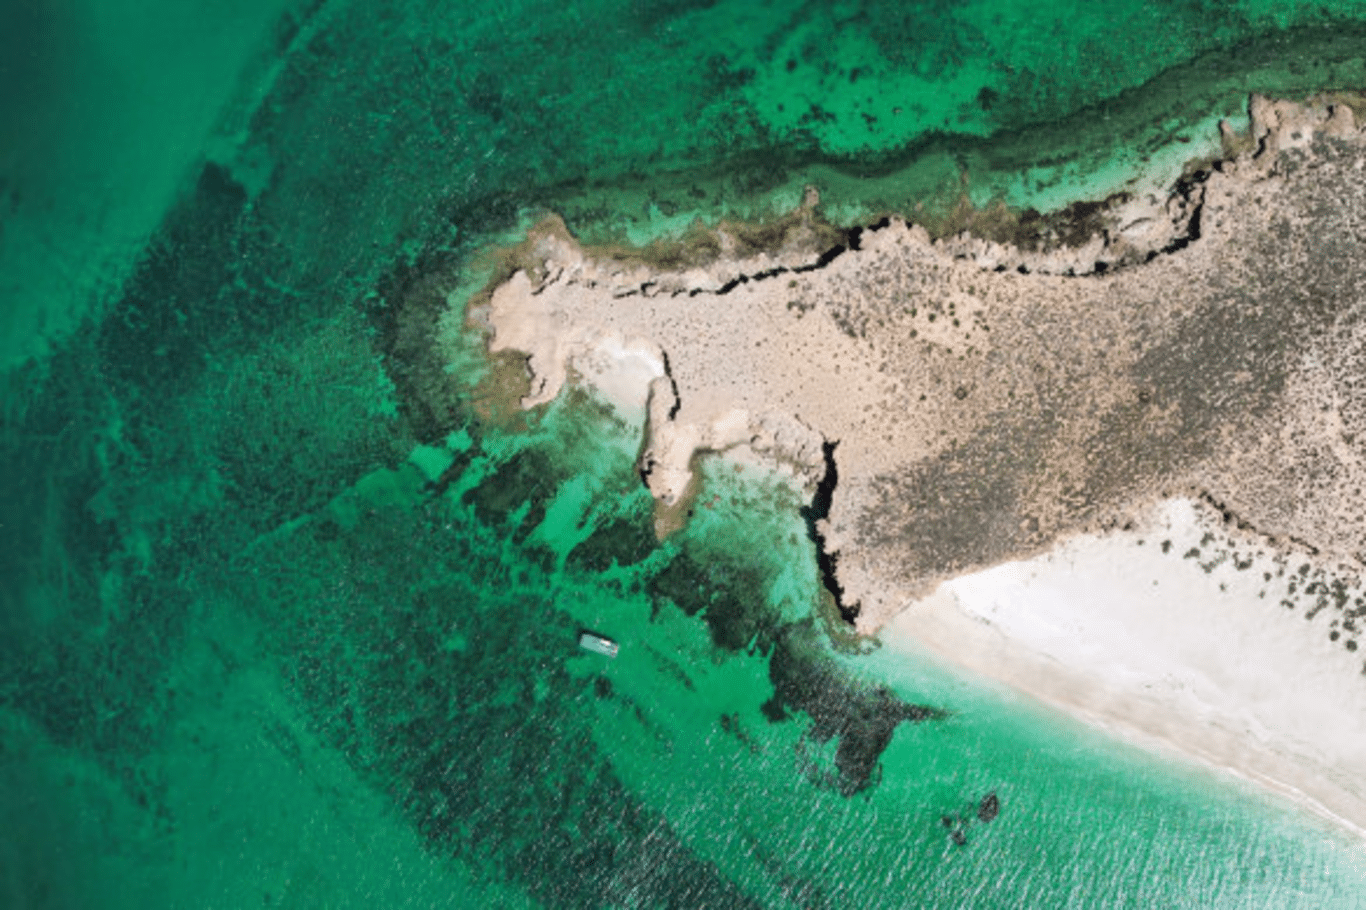 Explore the Montebello Islands: Australia's Atomic Bomb Test Site